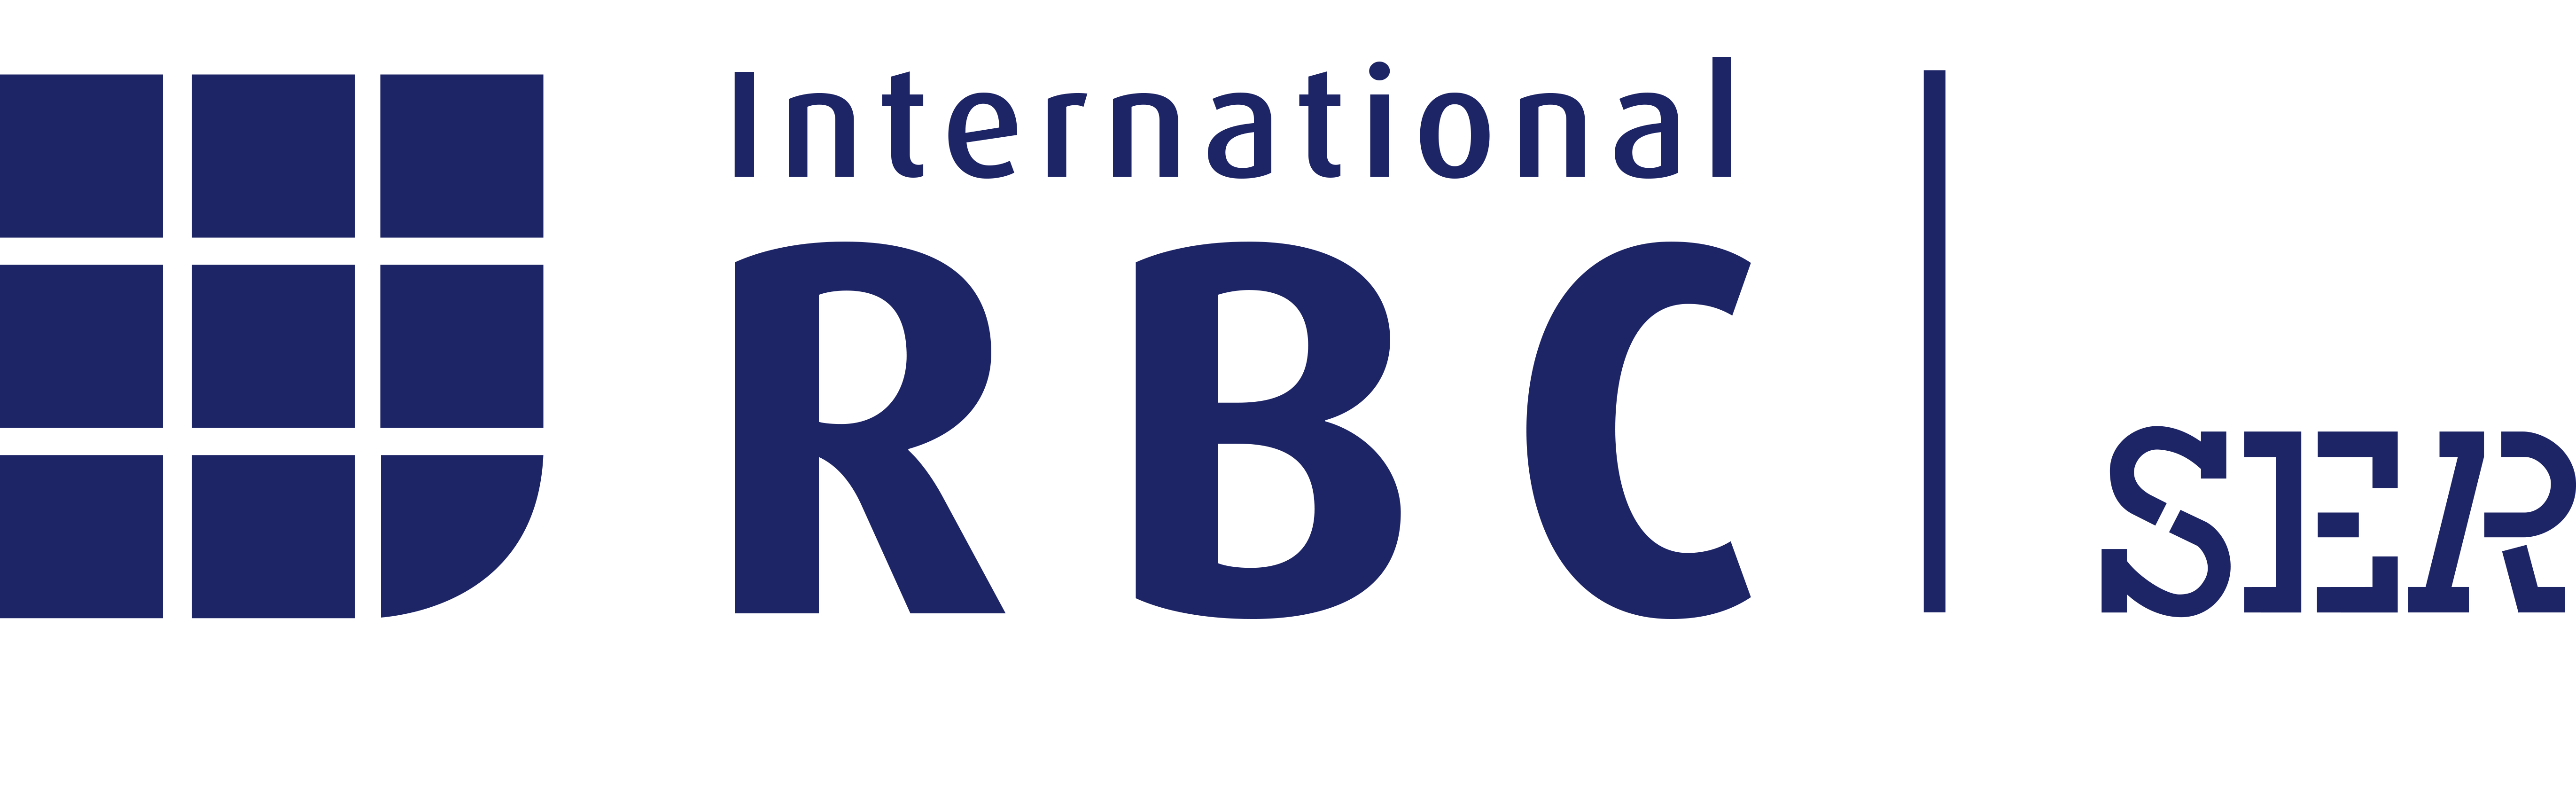 International RBC | SER